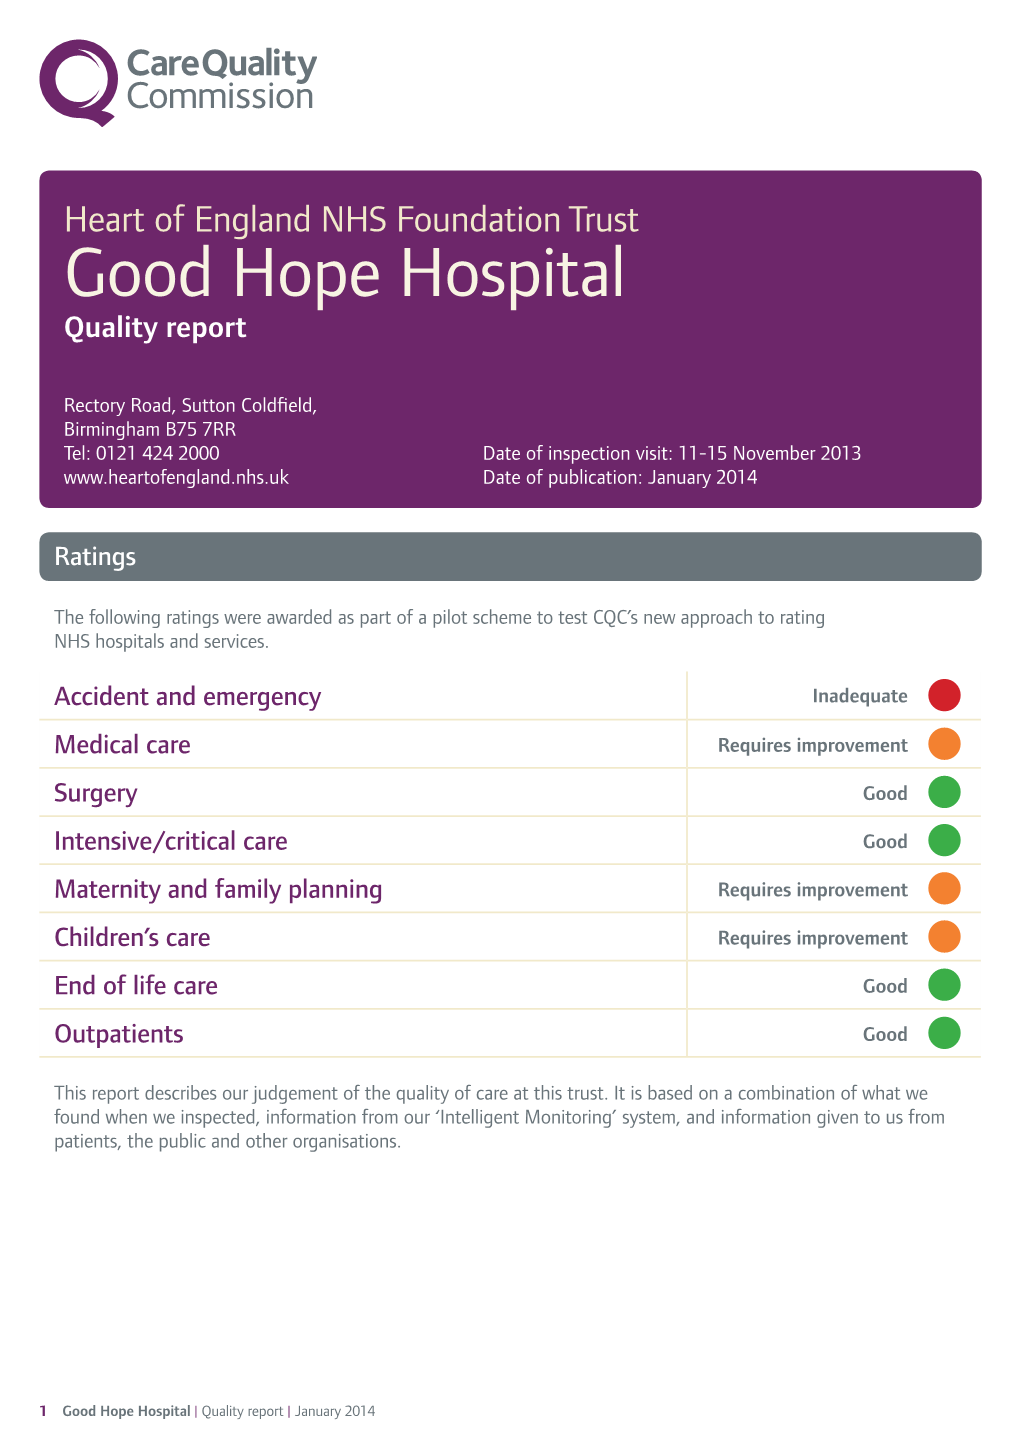 Good Hope Hospital Quality Report